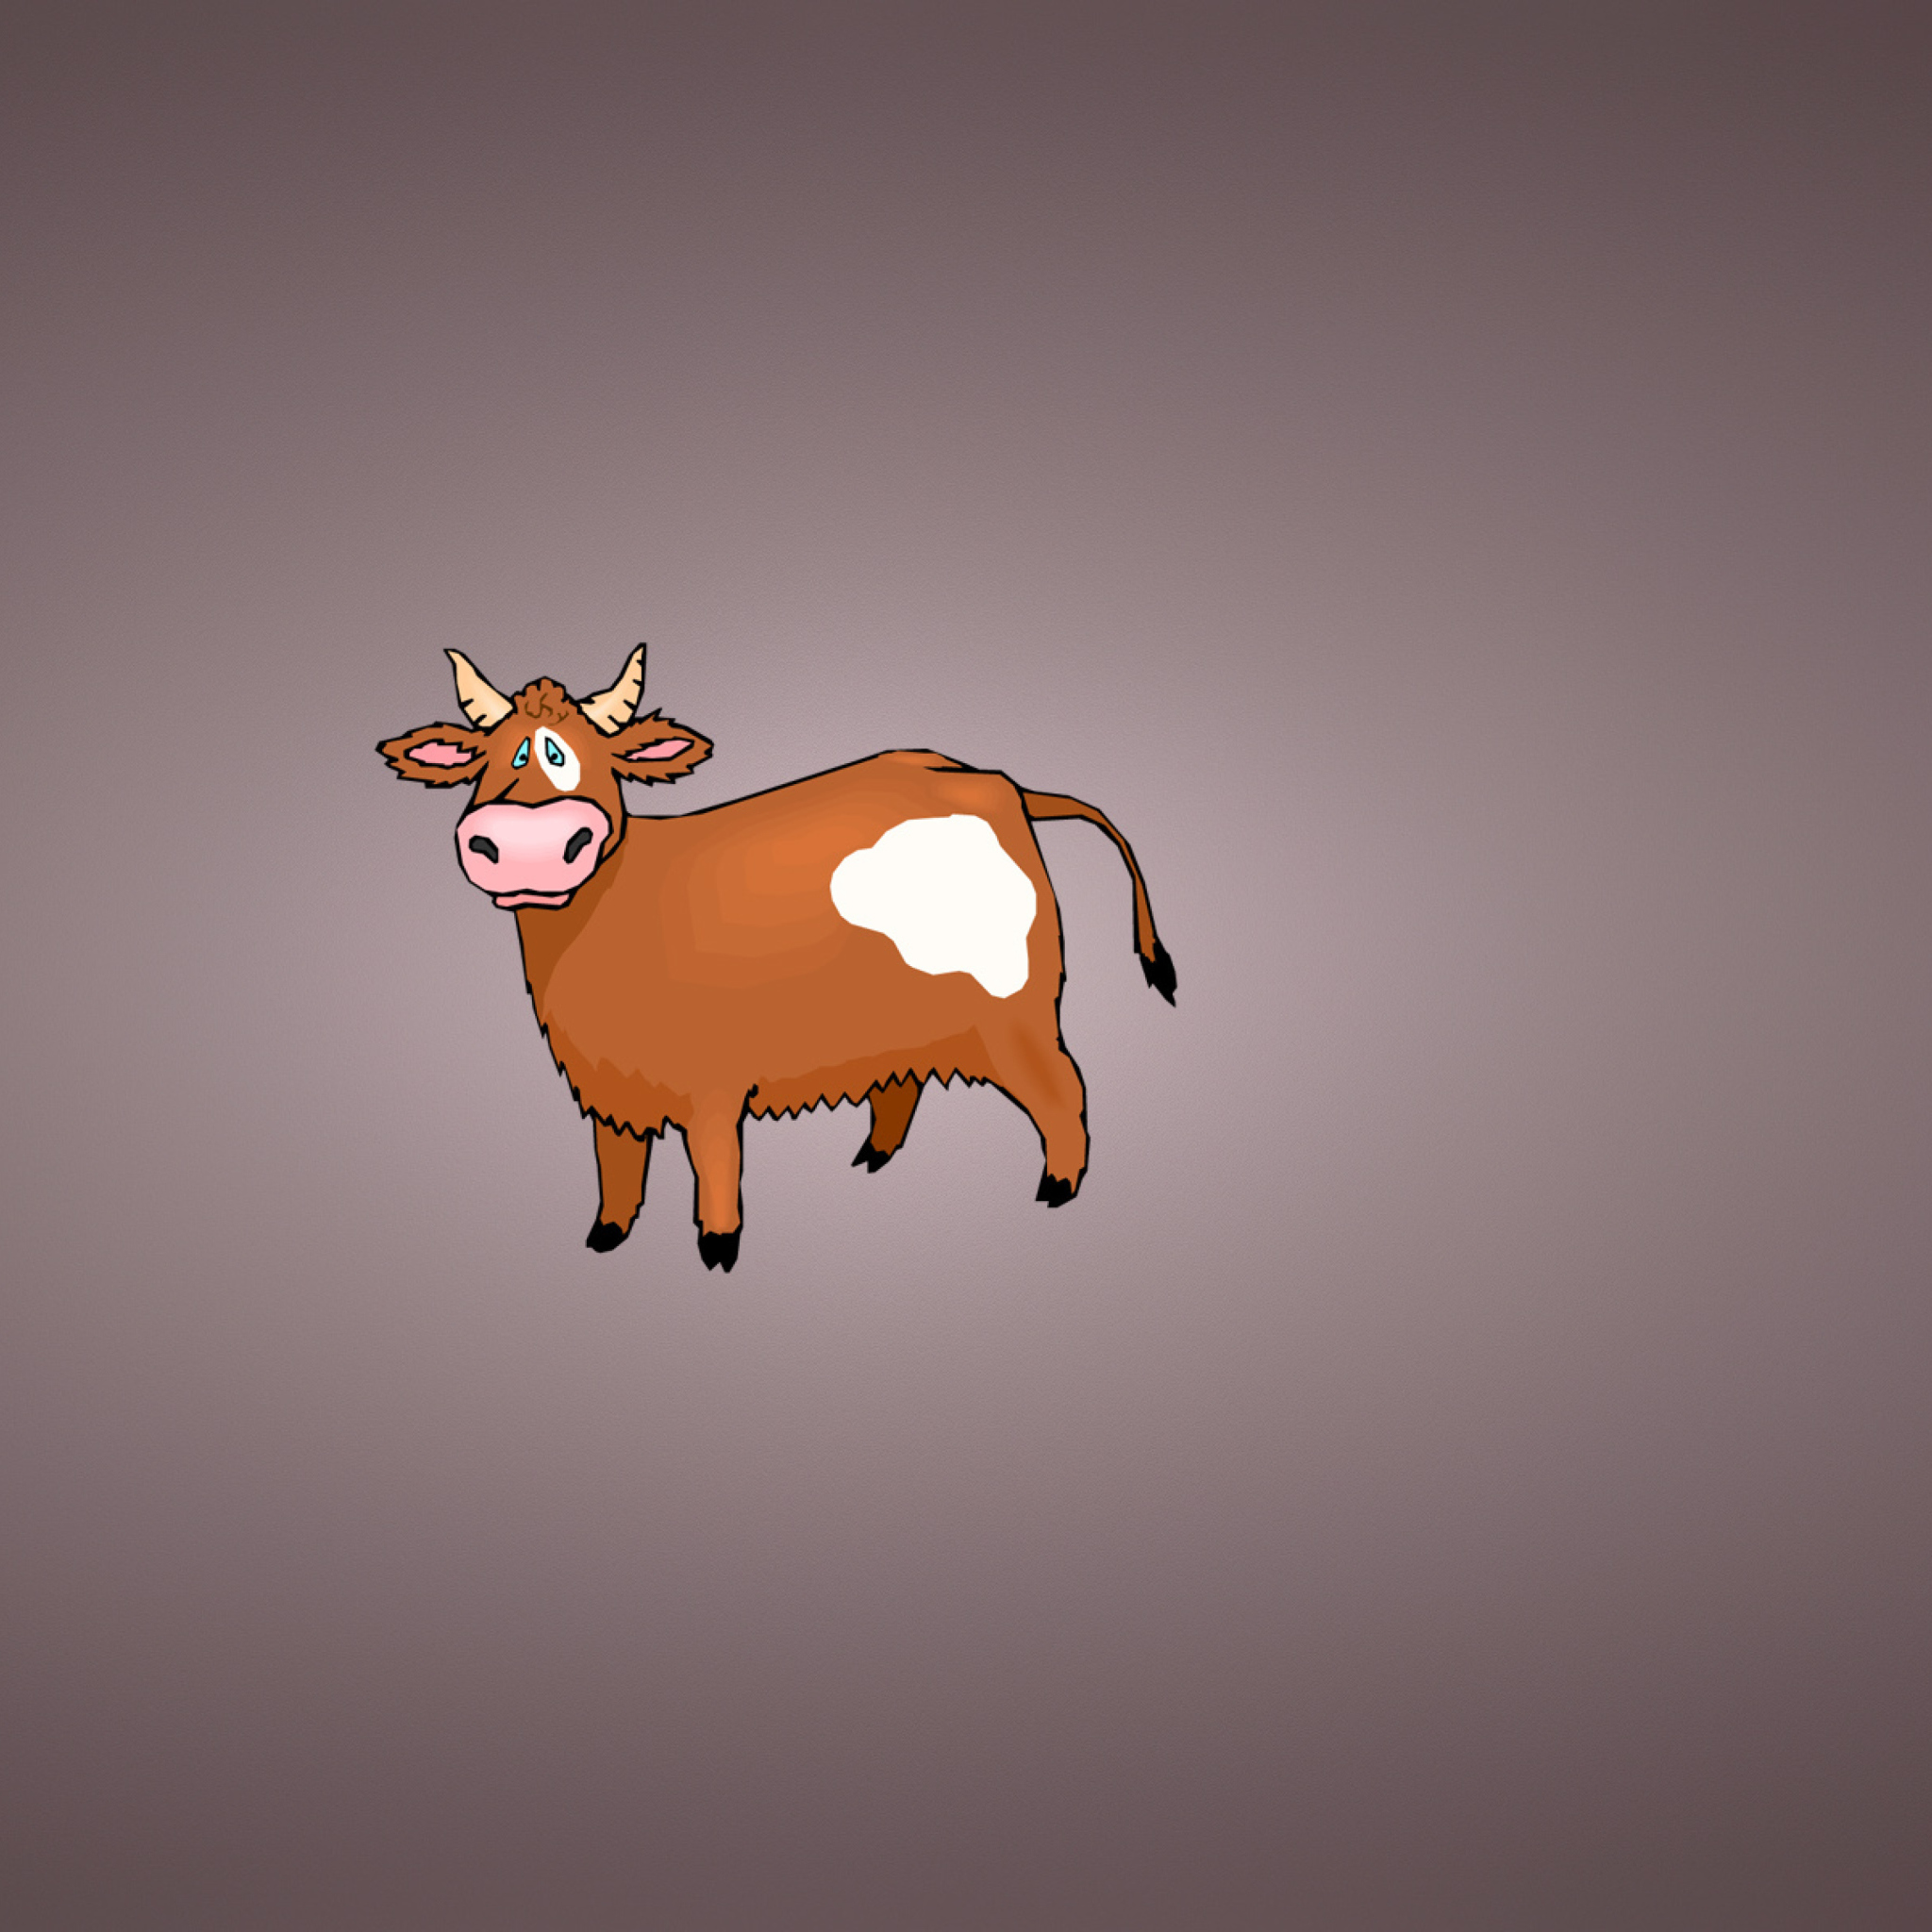 Funny Cow Illustration wallpaper 2048x2048